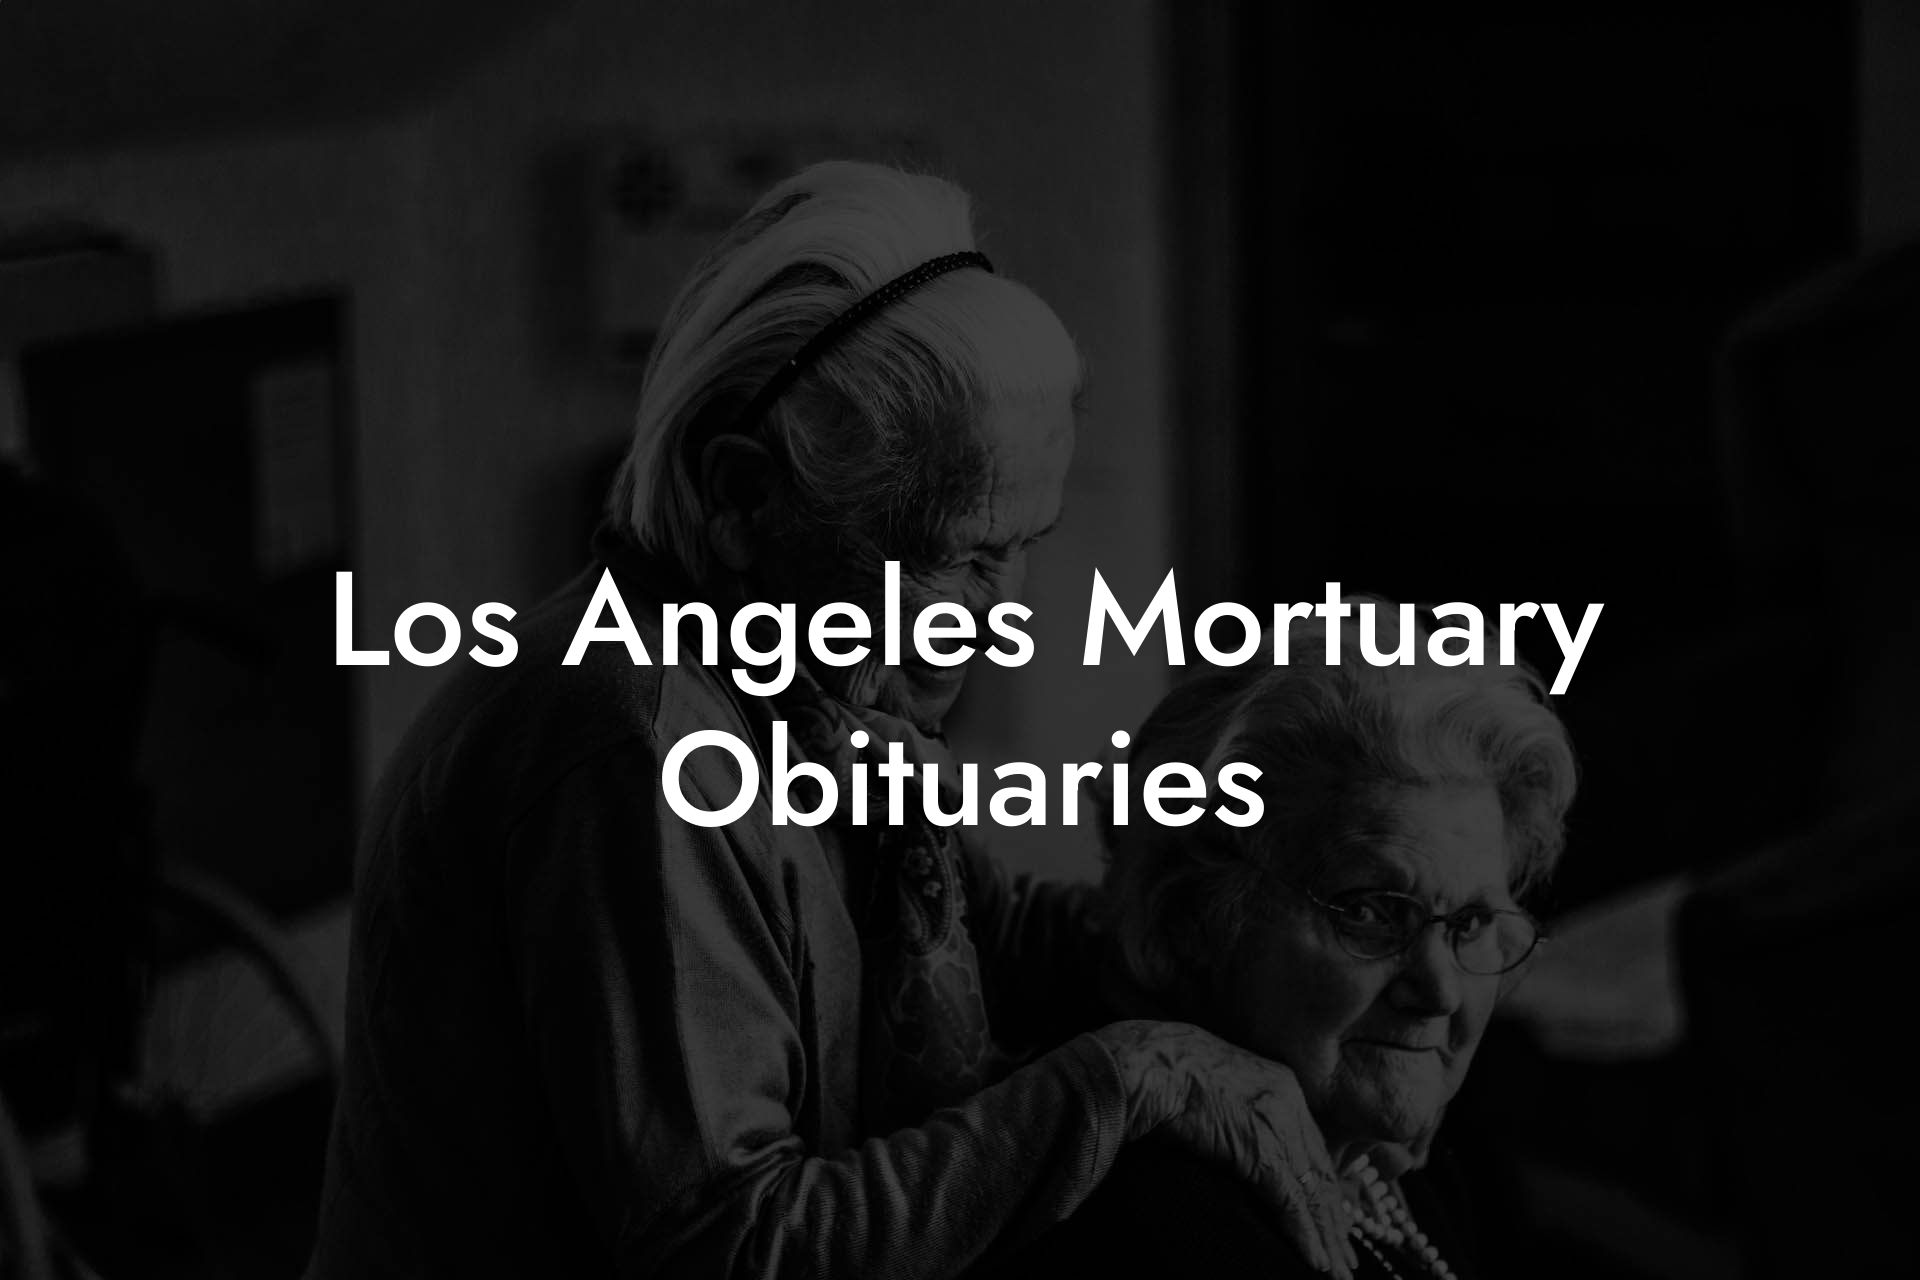 Los Angeles Mortuary Obituaries